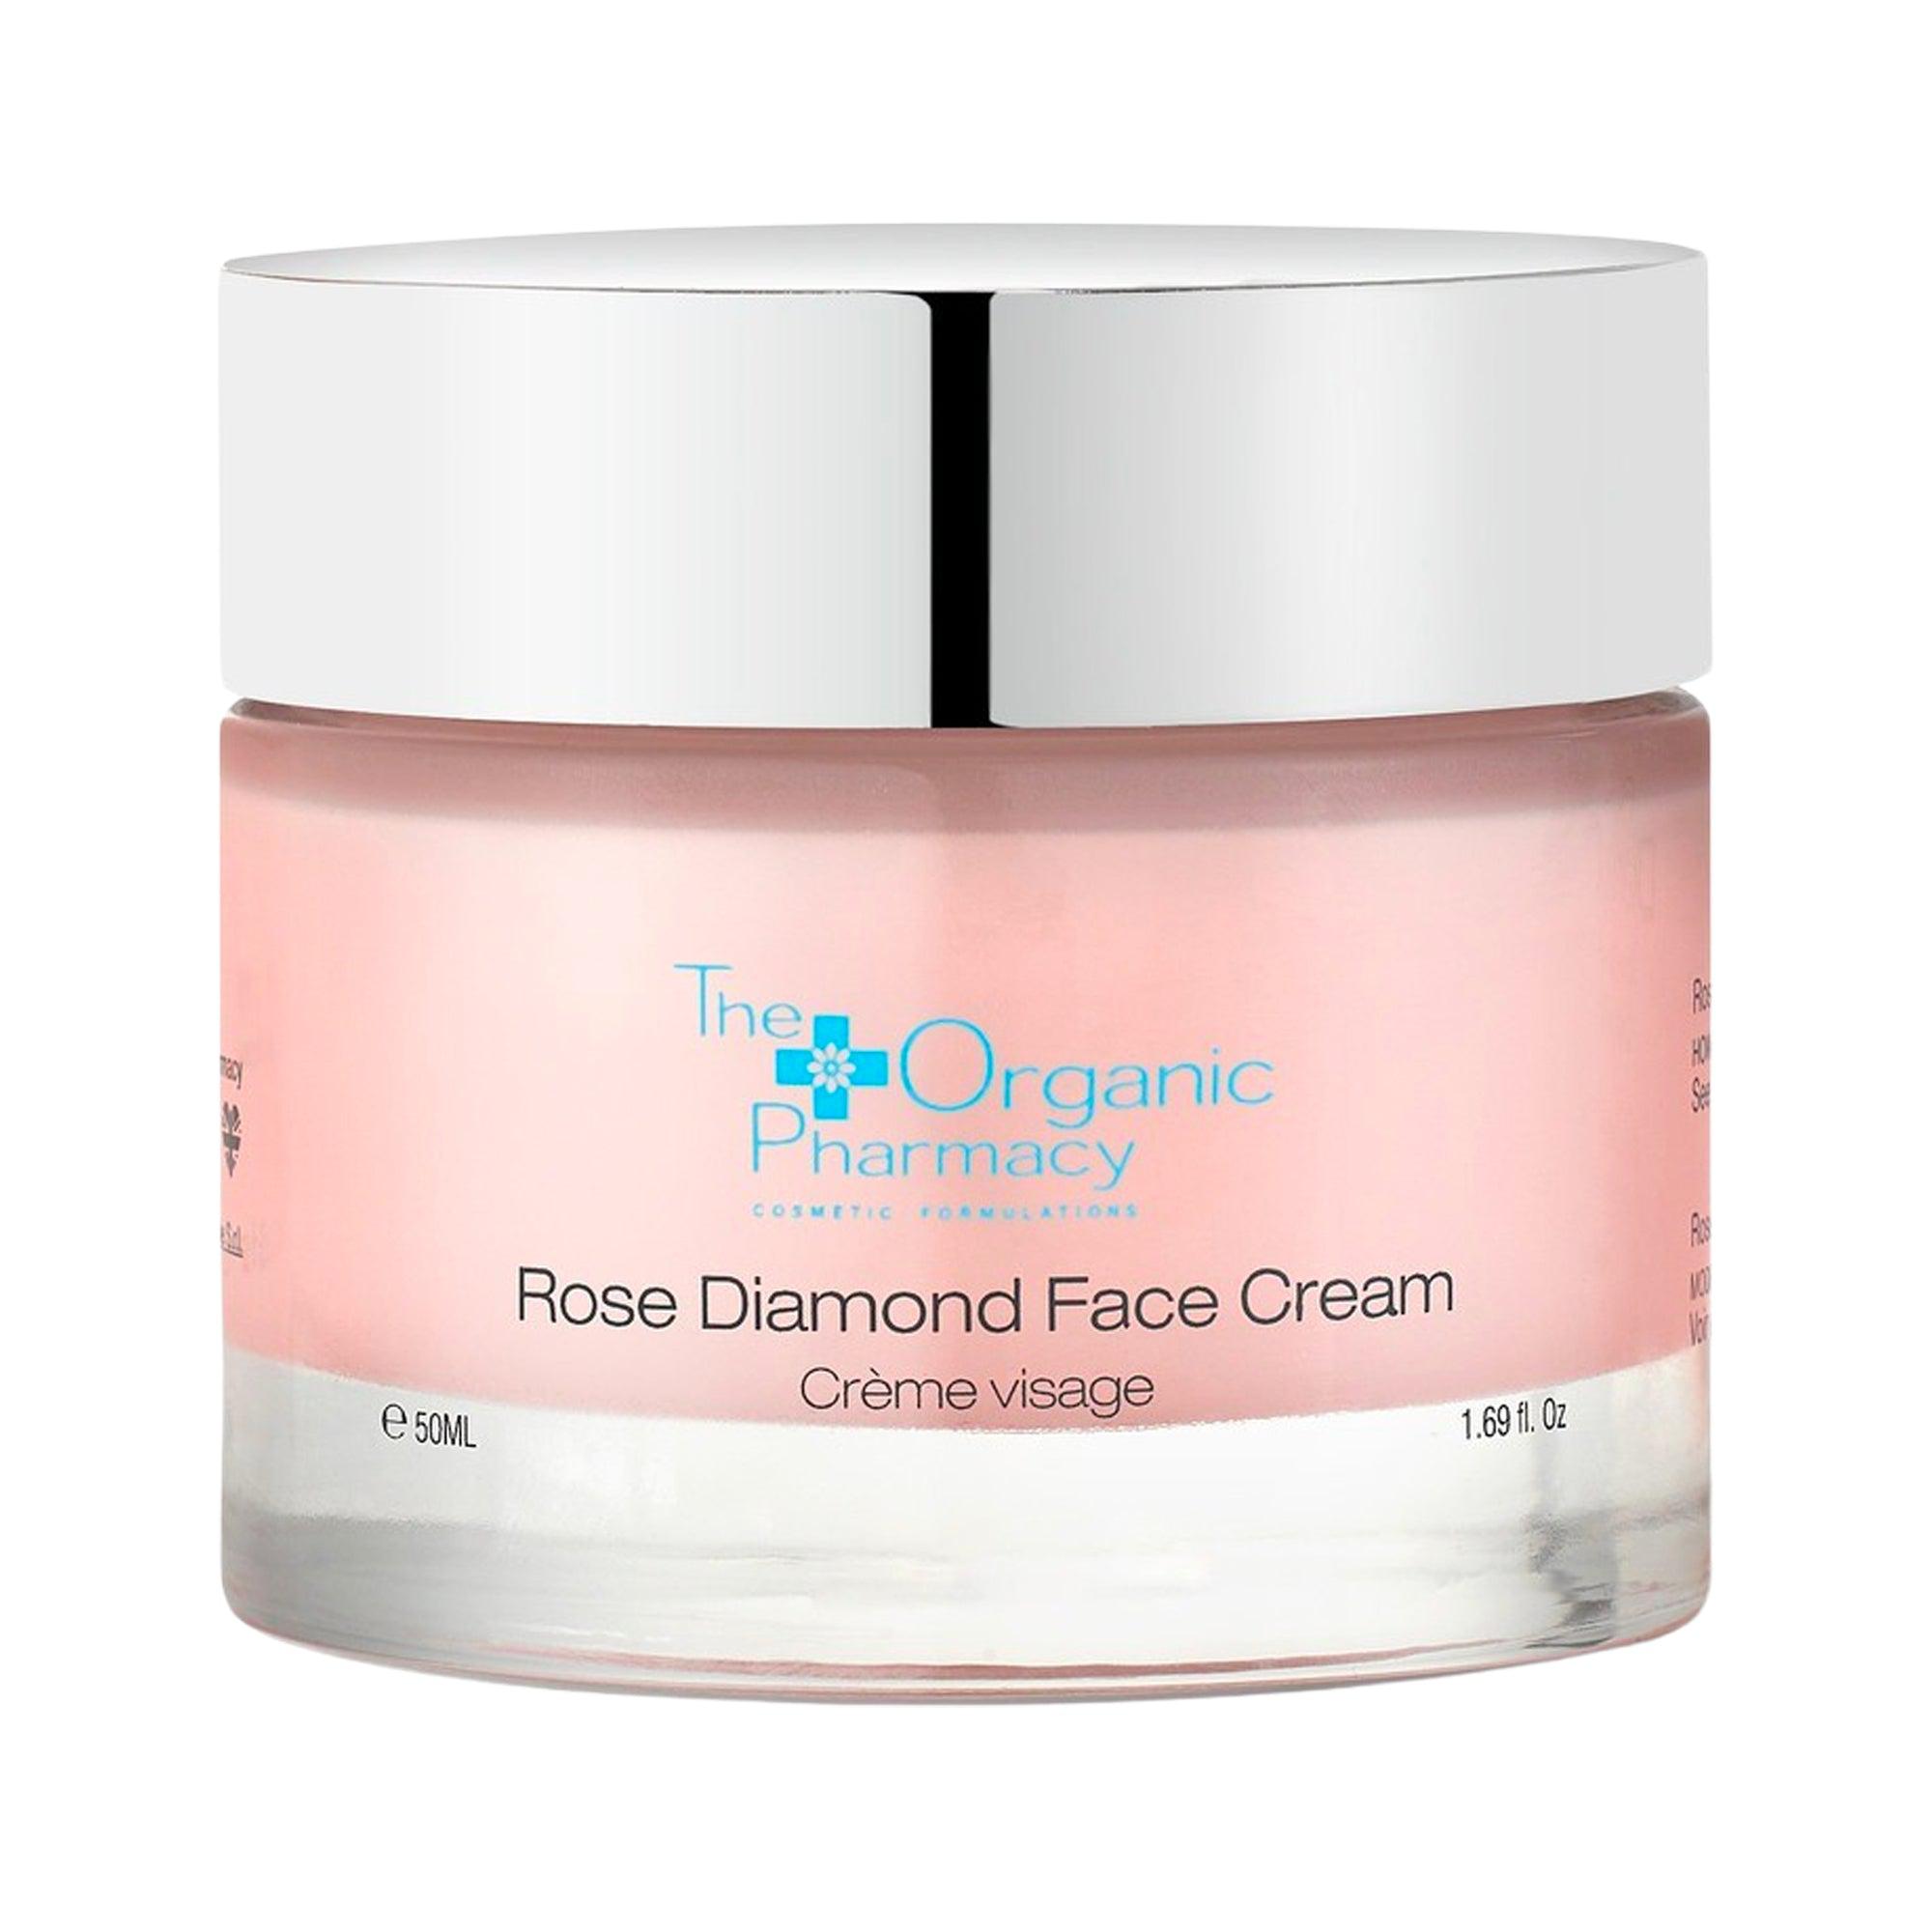 Crème visage – Rose diamond face cream Gesichtscreme – Rosendiamant-Gesichtscreme - The Organic Pharmacy